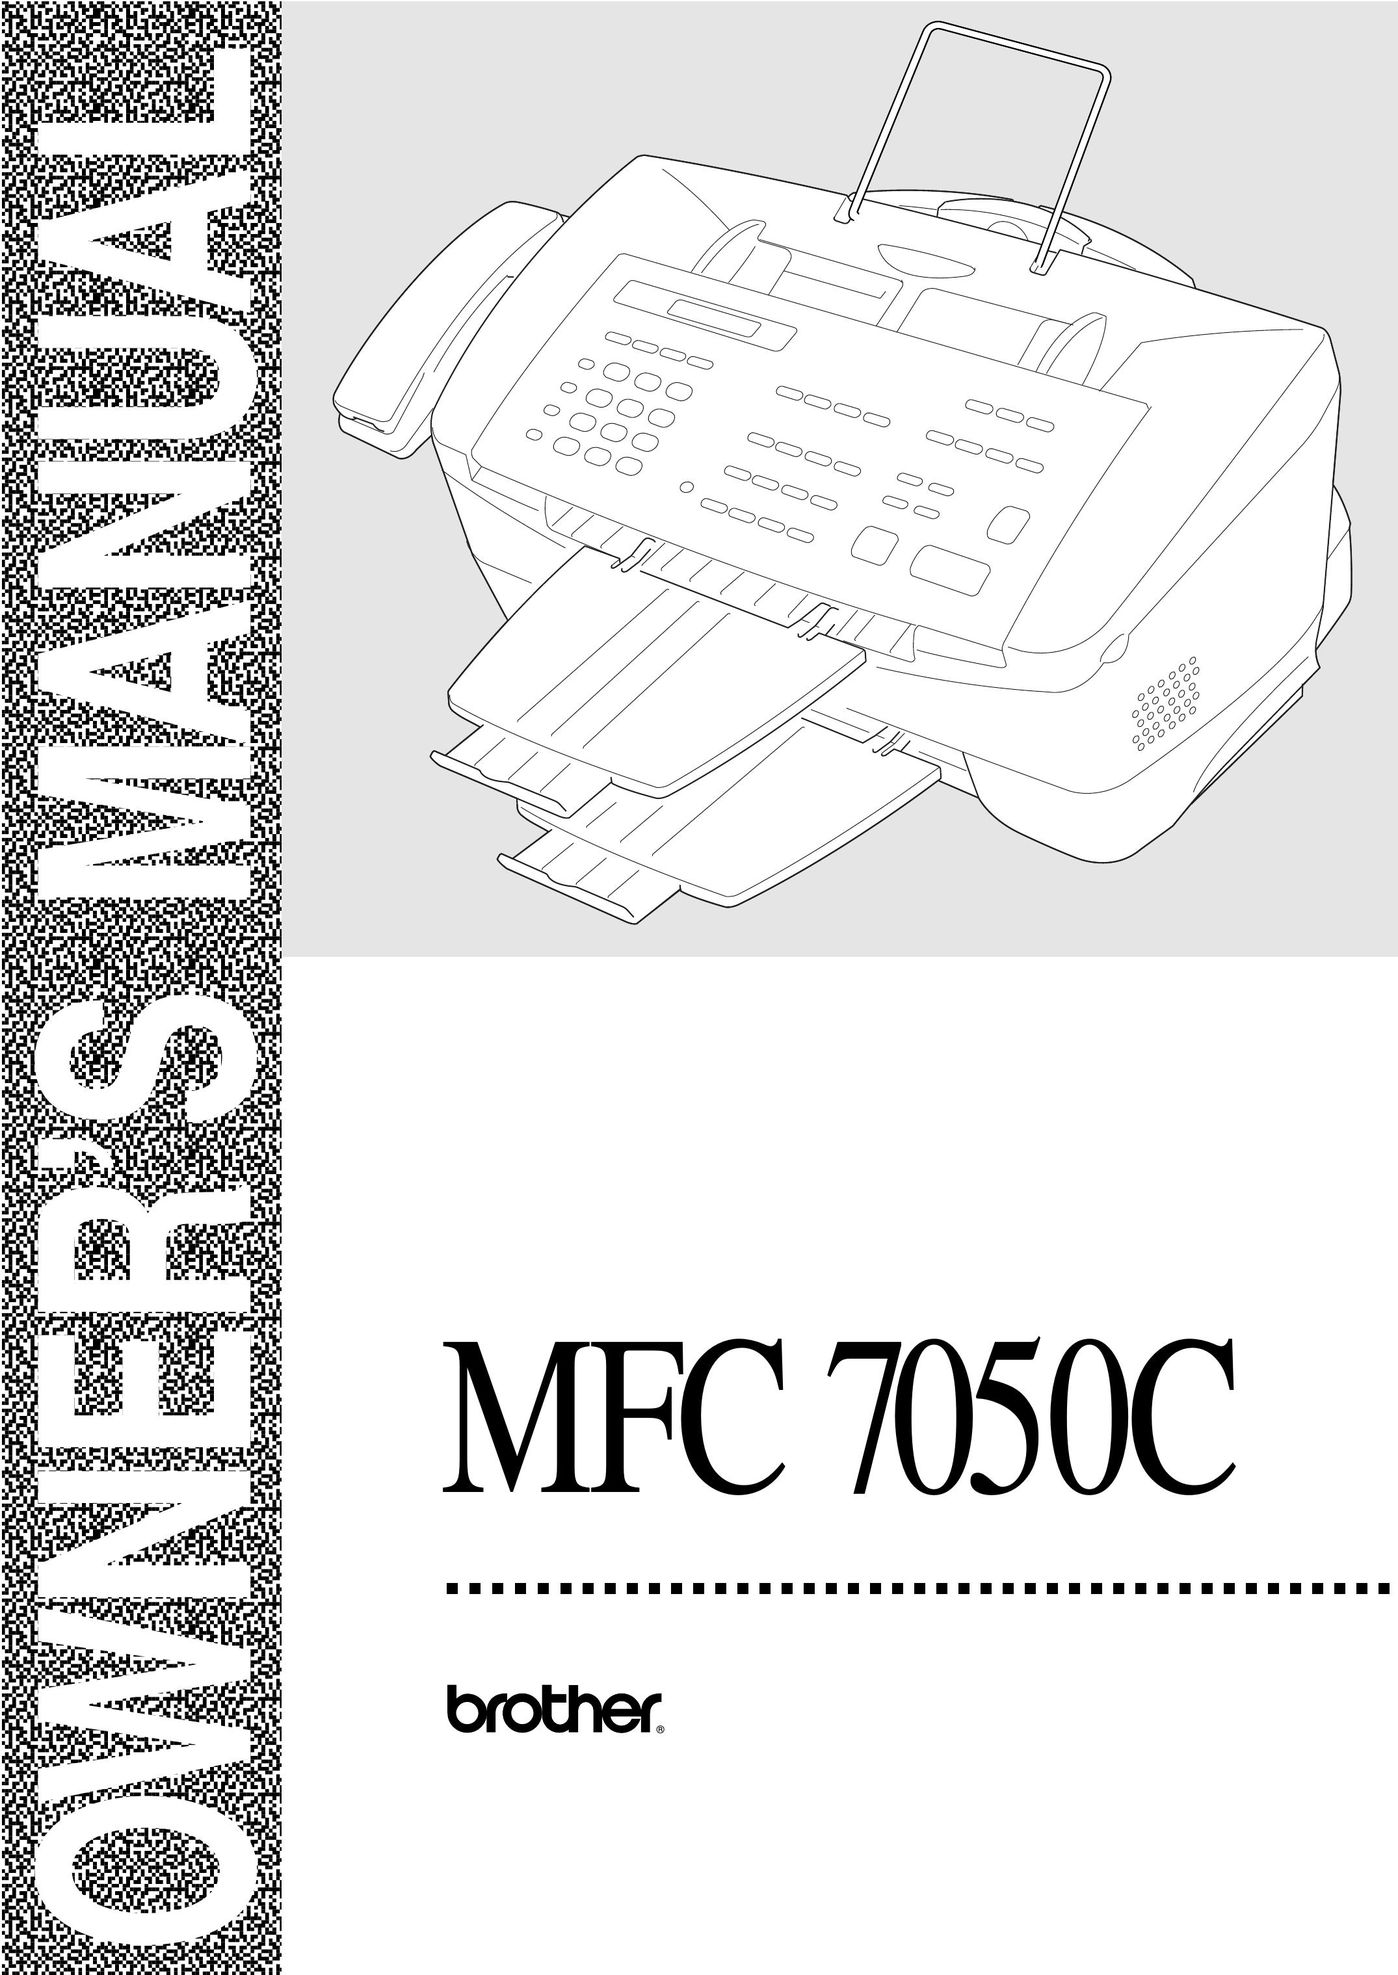 Visioneer MFC7050C Fax Machine User Manual